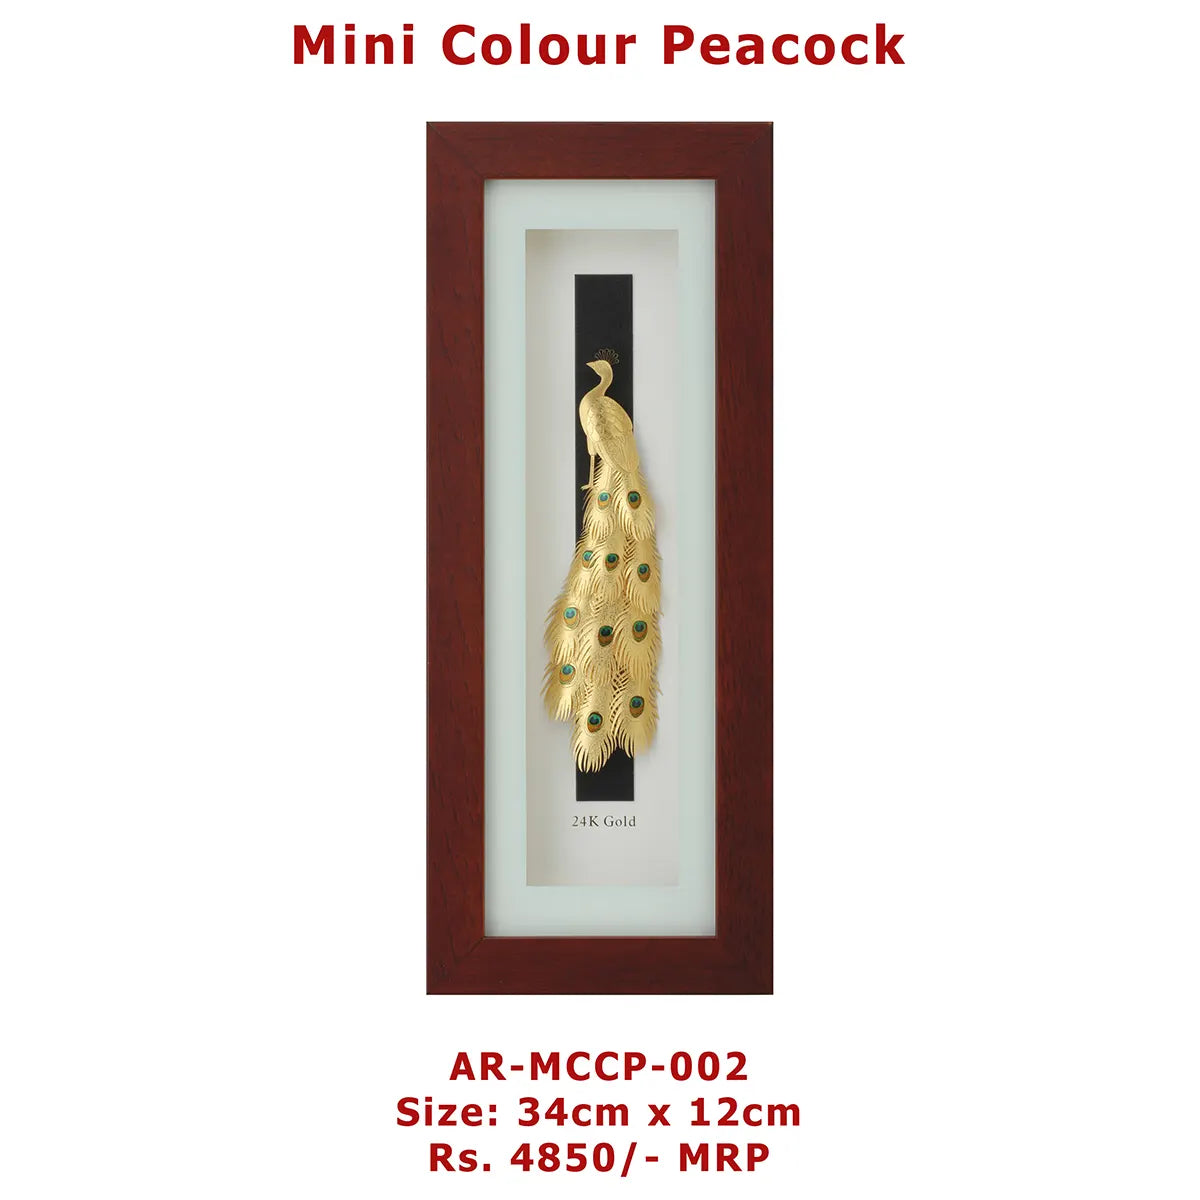 Mini Colour Peacock 34cm x 12cm Big size Frame